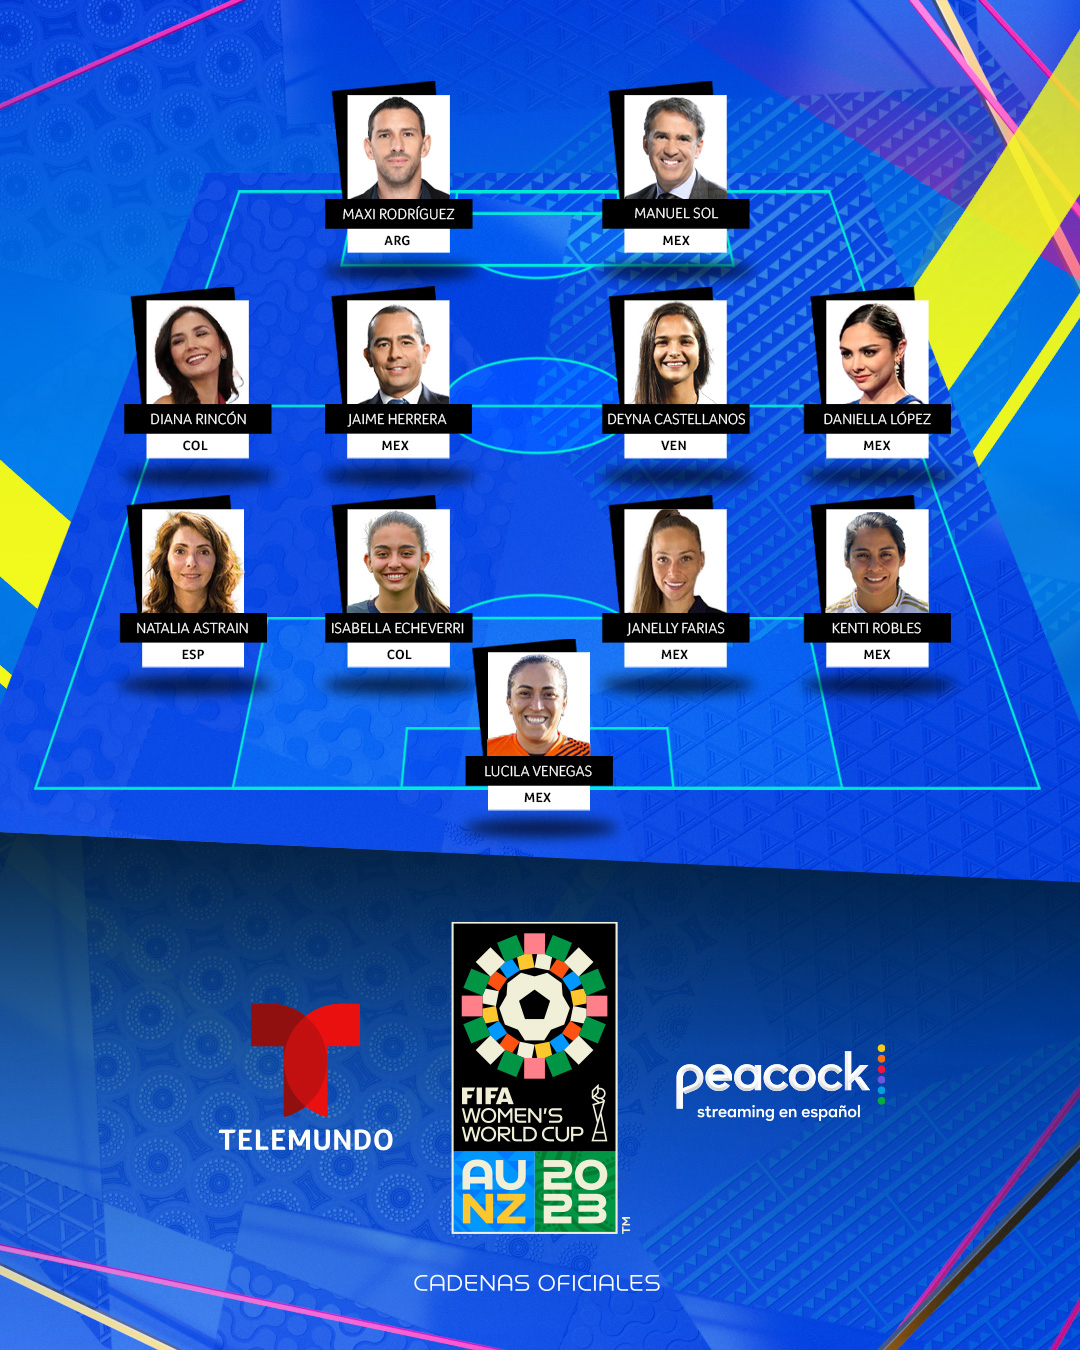 Telemundo introduces FIFA WOMENS WORLD CUP 2023 Broadcast Team